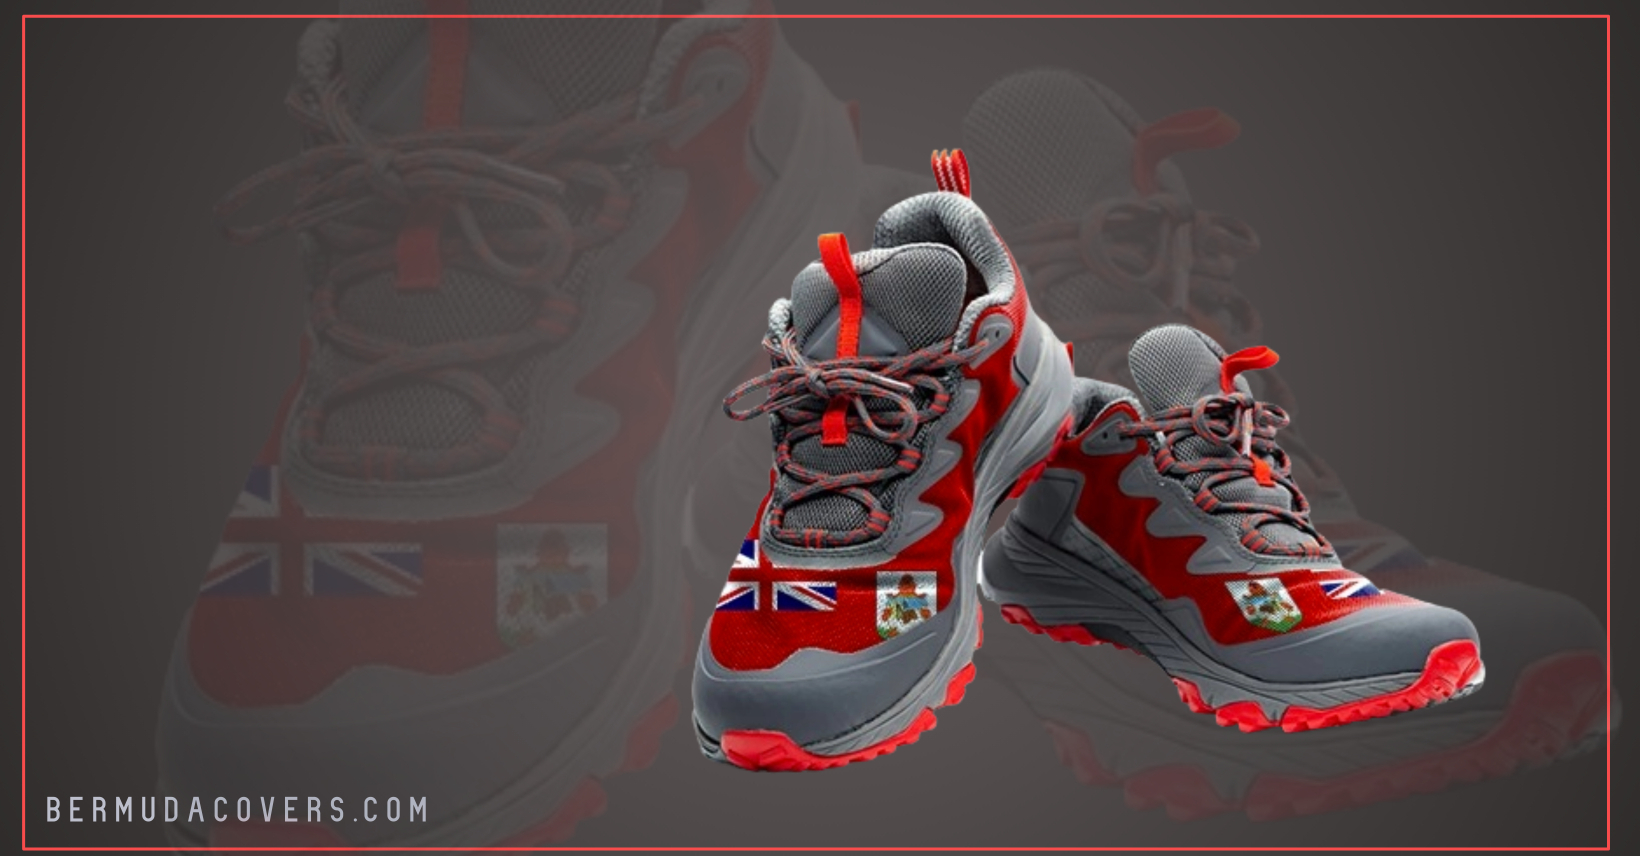 Just for kicks red Bermuda sneakers social media graphic cover 43532532 (1)